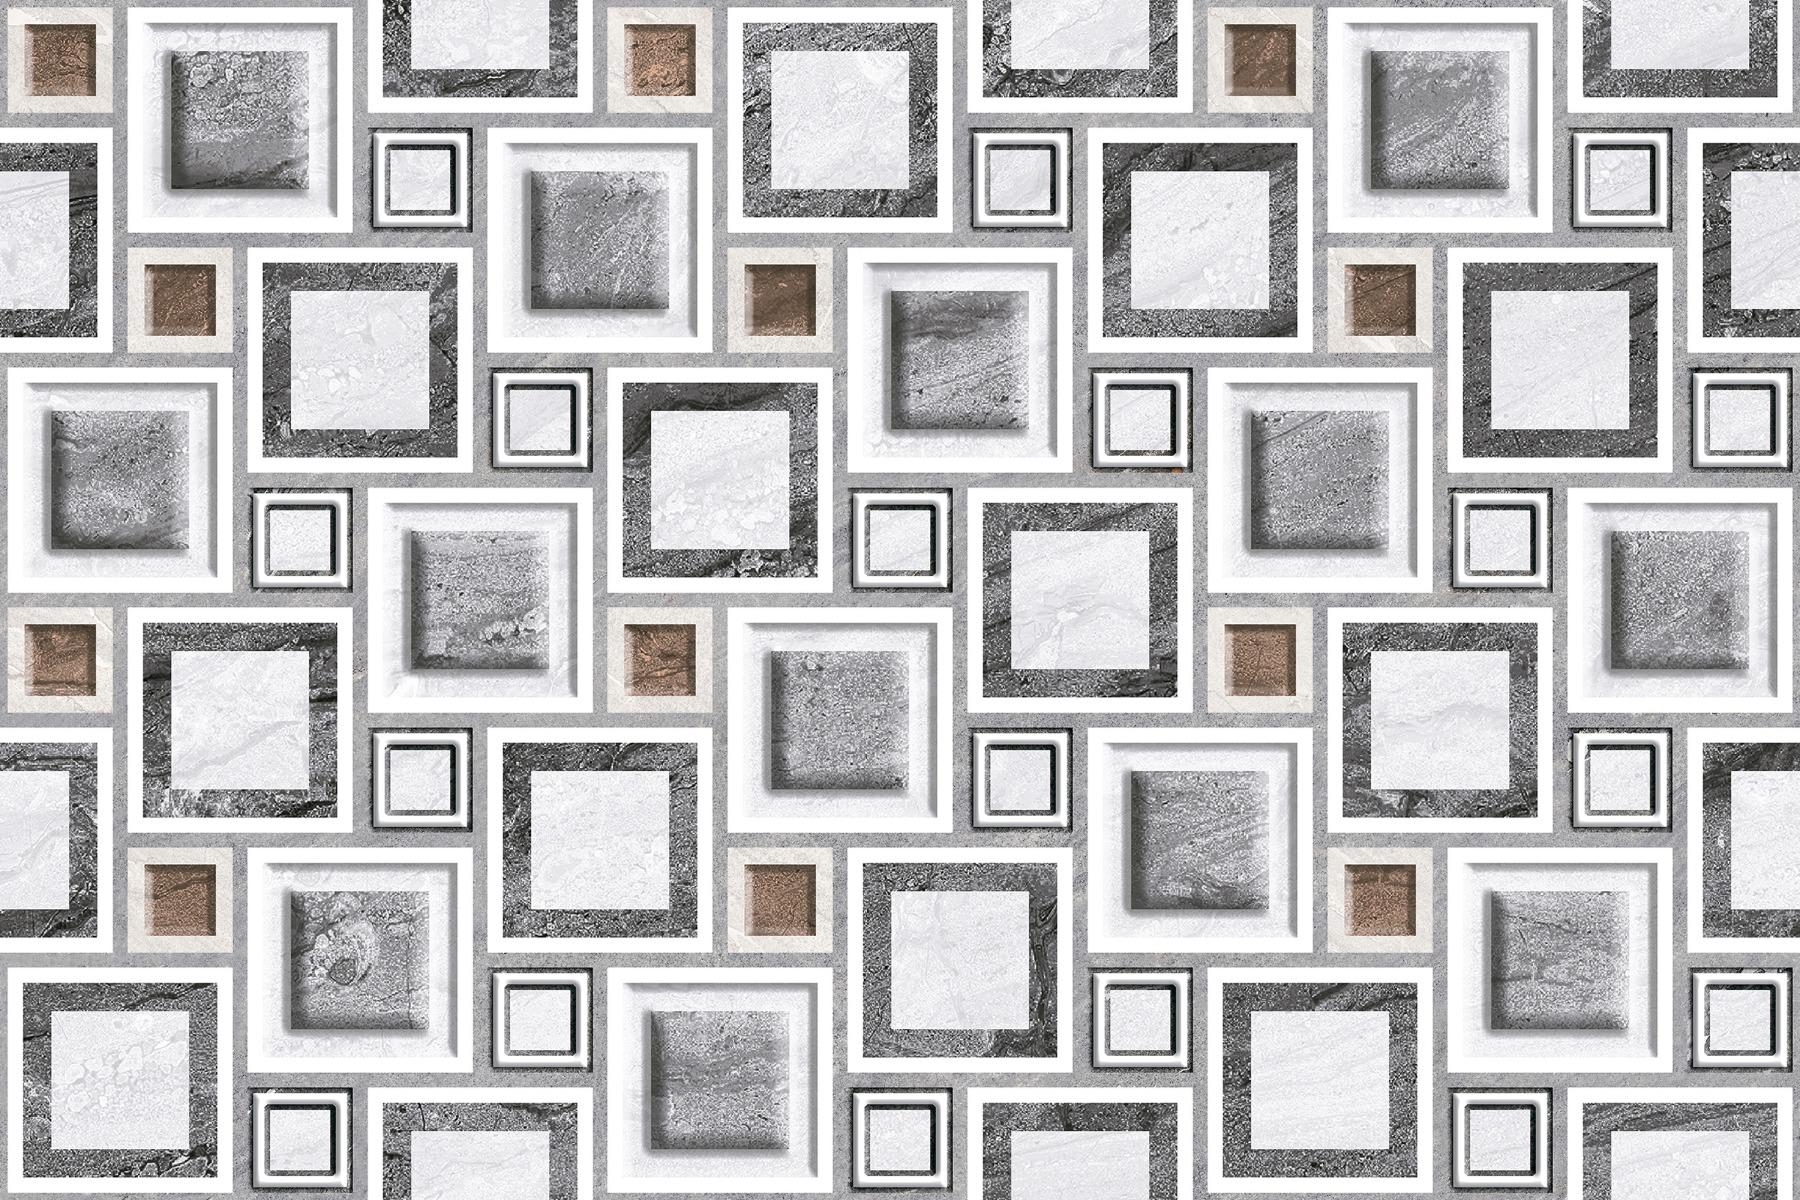 Glossy Tiles for Bathroom Tiles, Living Room Tiles, Accent Tiles